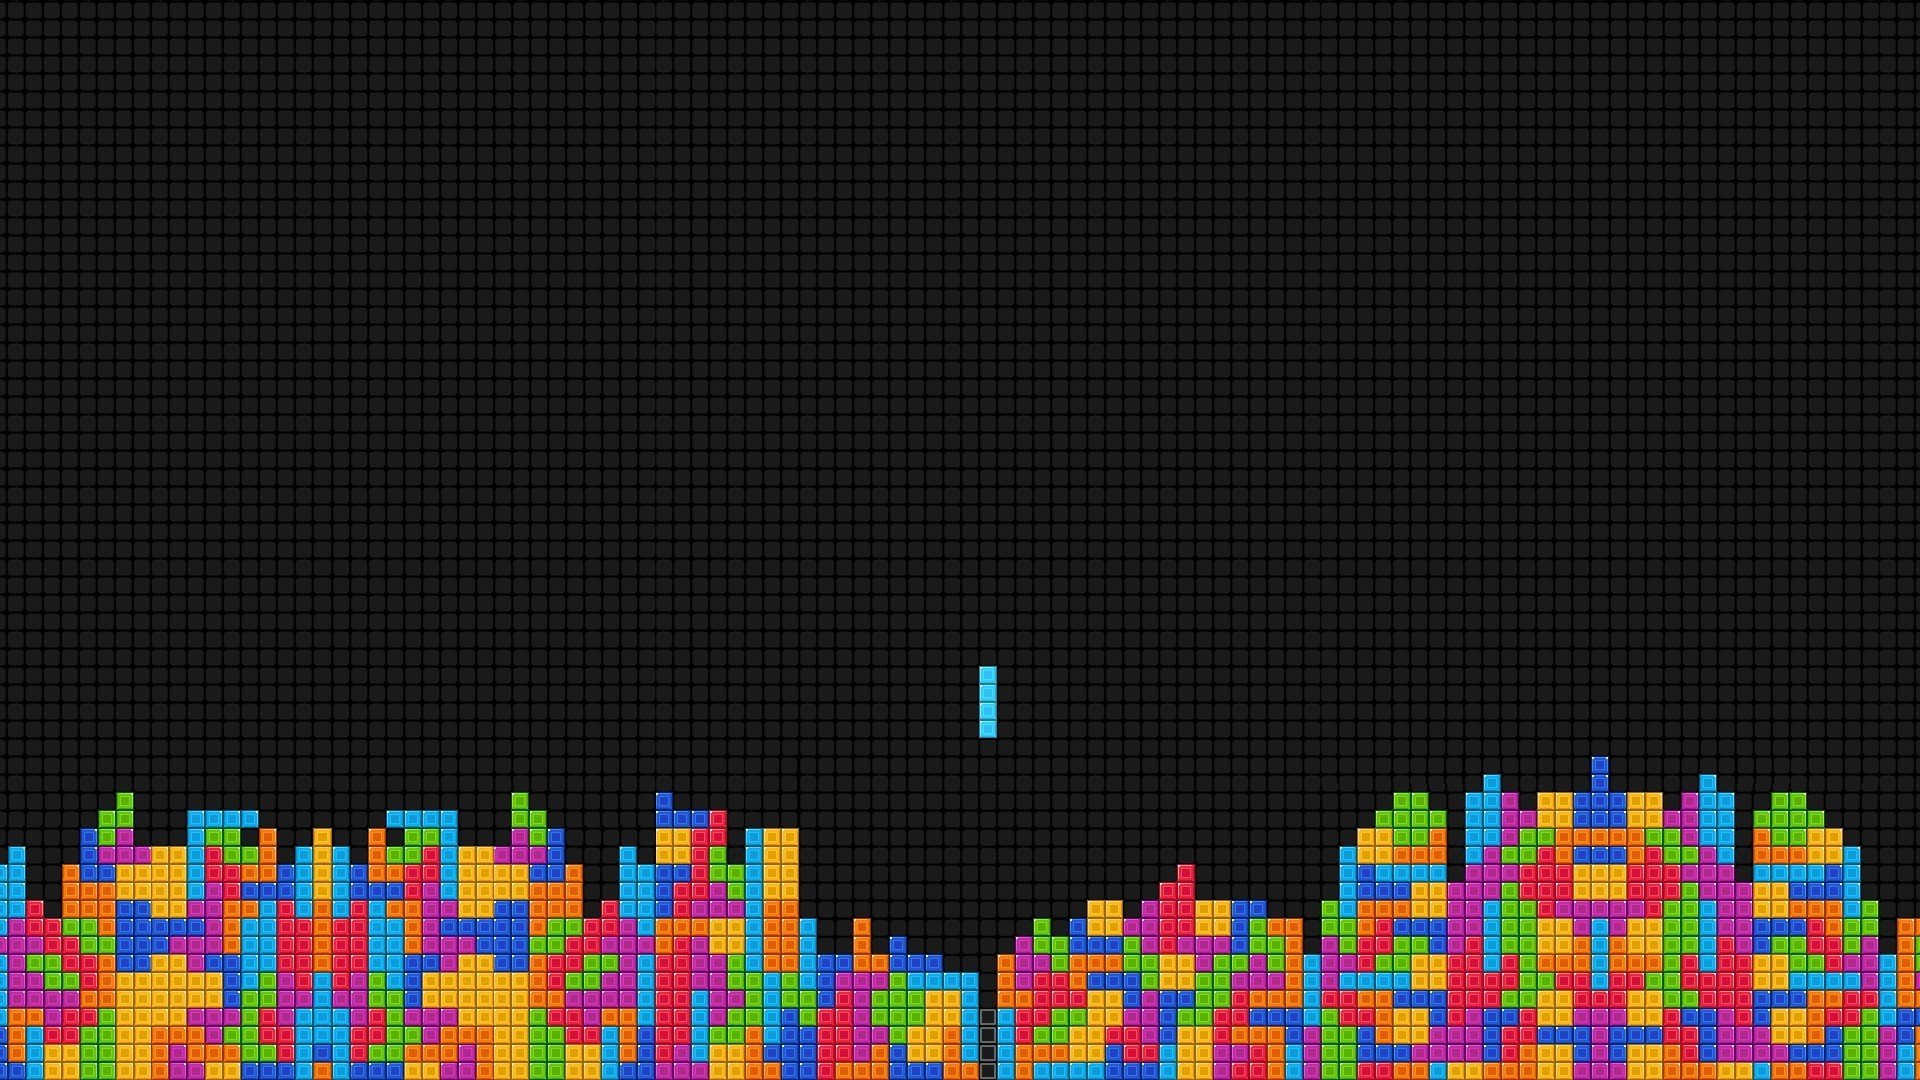 Tetris HD Wallpaper Background Image 1920x1080 ID239007